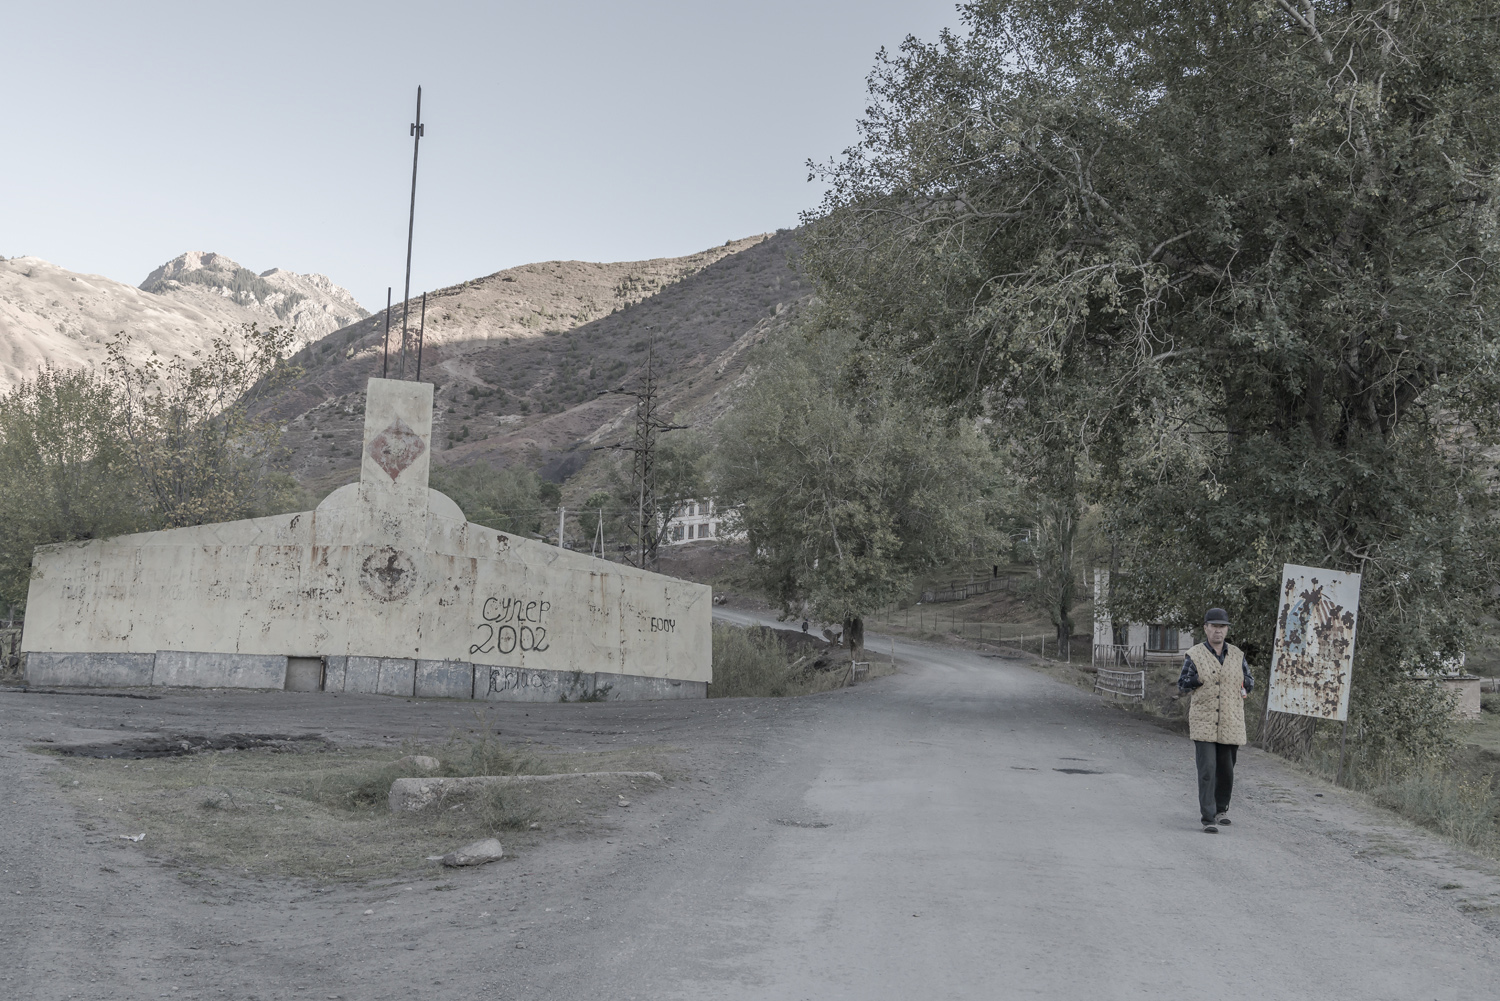 min-kush-soviet-uranium-mining-town-industrial-Russia-Kyrgyzstan-ruins-soviet-sign-jo-kearney-photos-video-photography.entrance.jpg